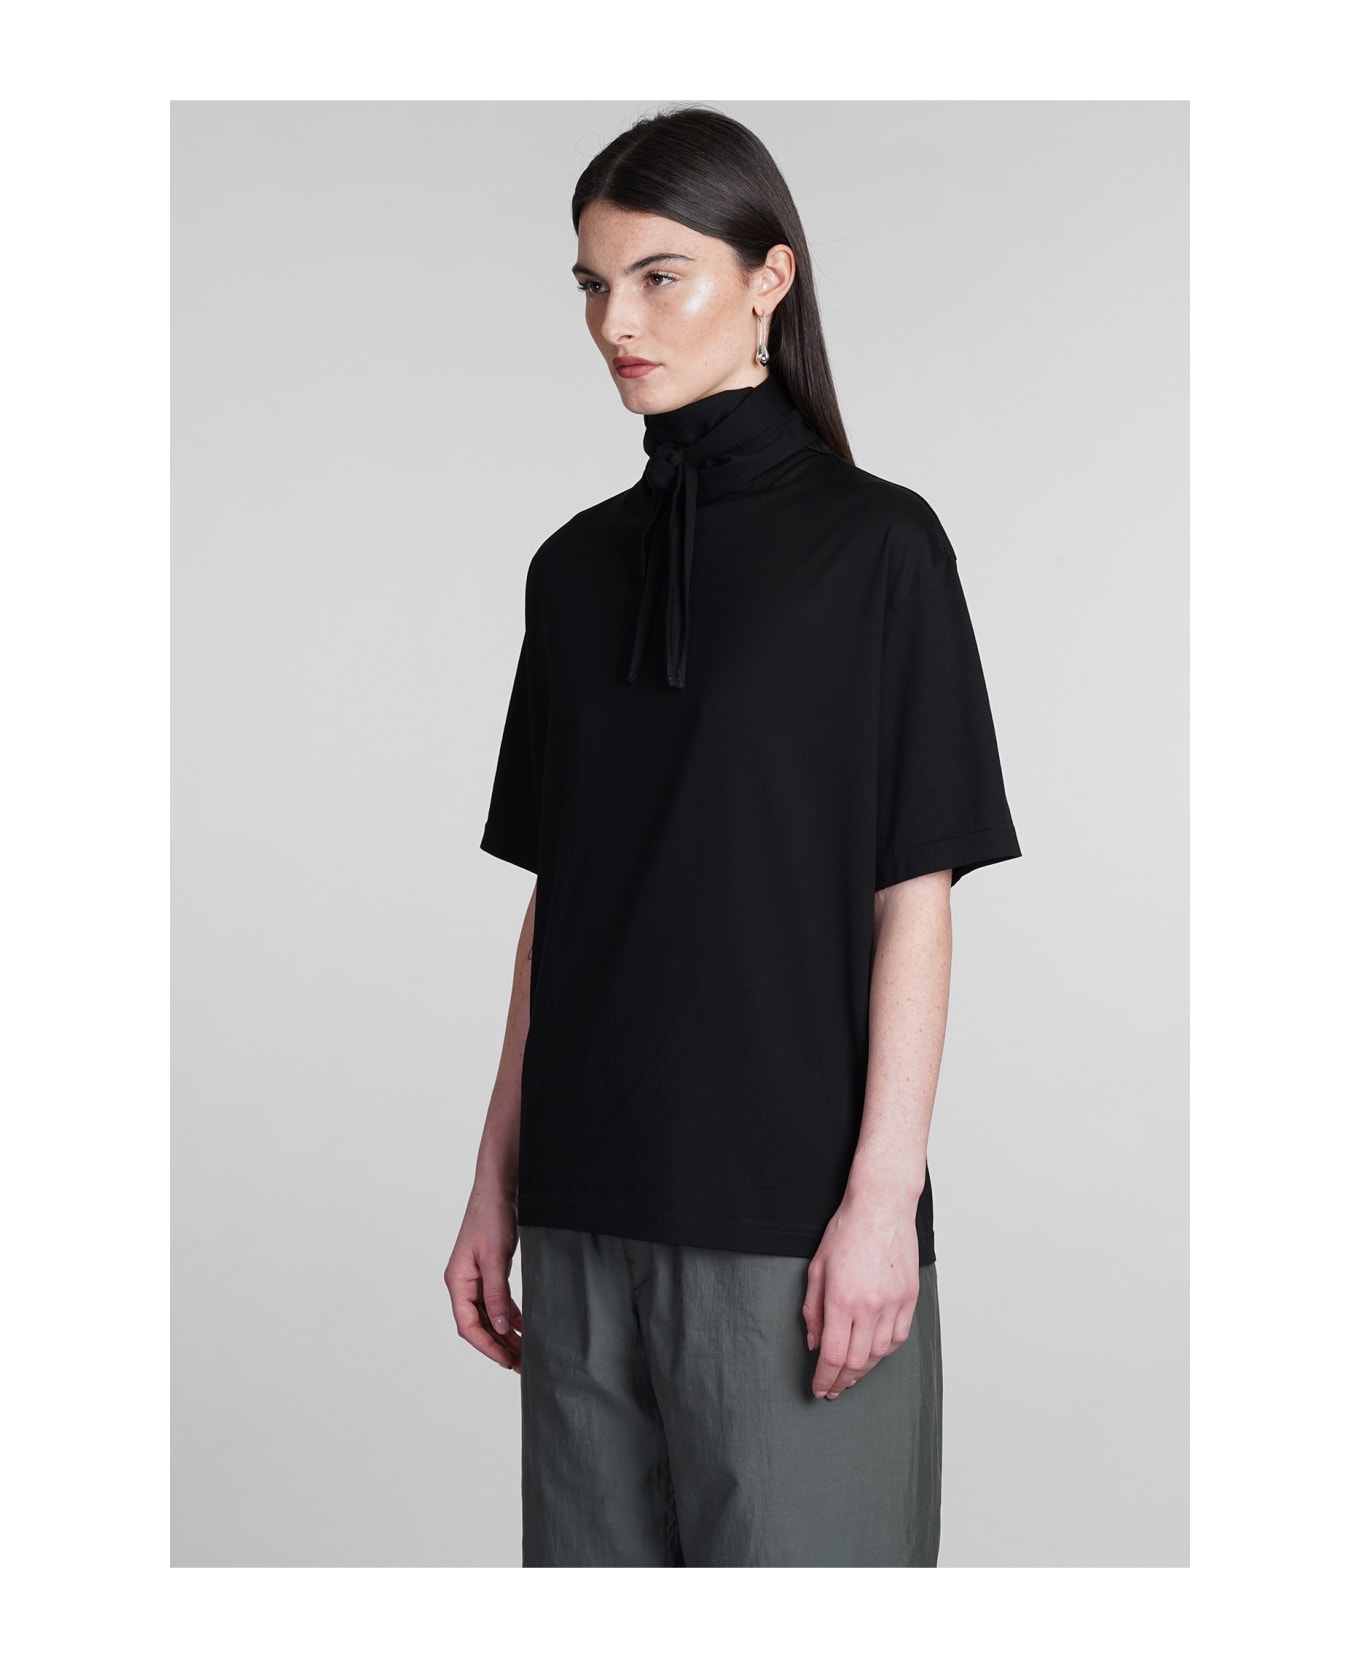 Lemaire T-shirt In Black Cotton - black